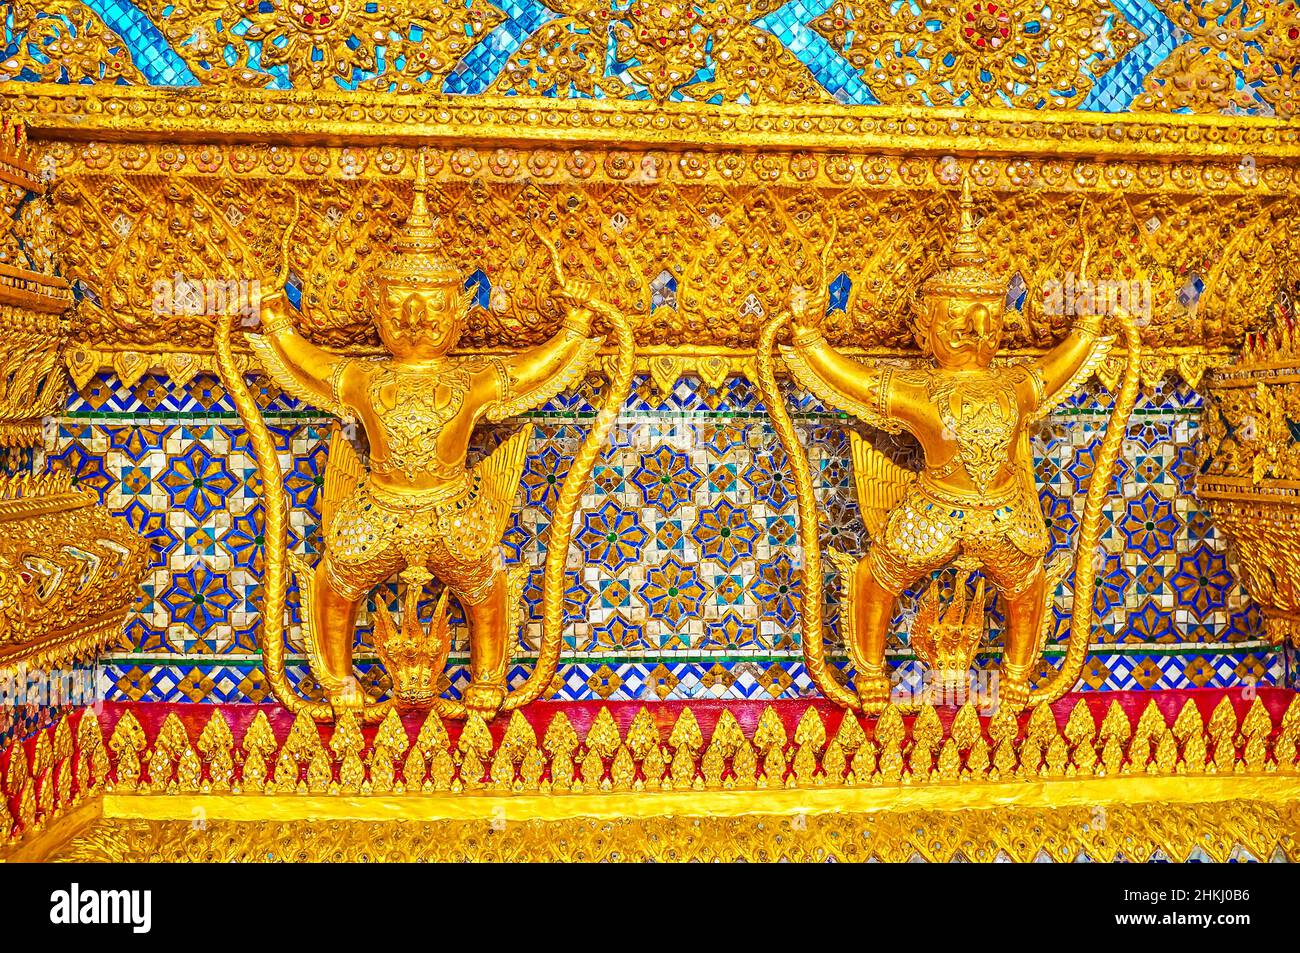 BANGKOK, THAILAND - MAY 12, 2019: The golden Garudas on facade of Ubosot in Emerald Buddha Temple of Grand Palace, on May 12 in Bangkok, Thailand Stock Photo